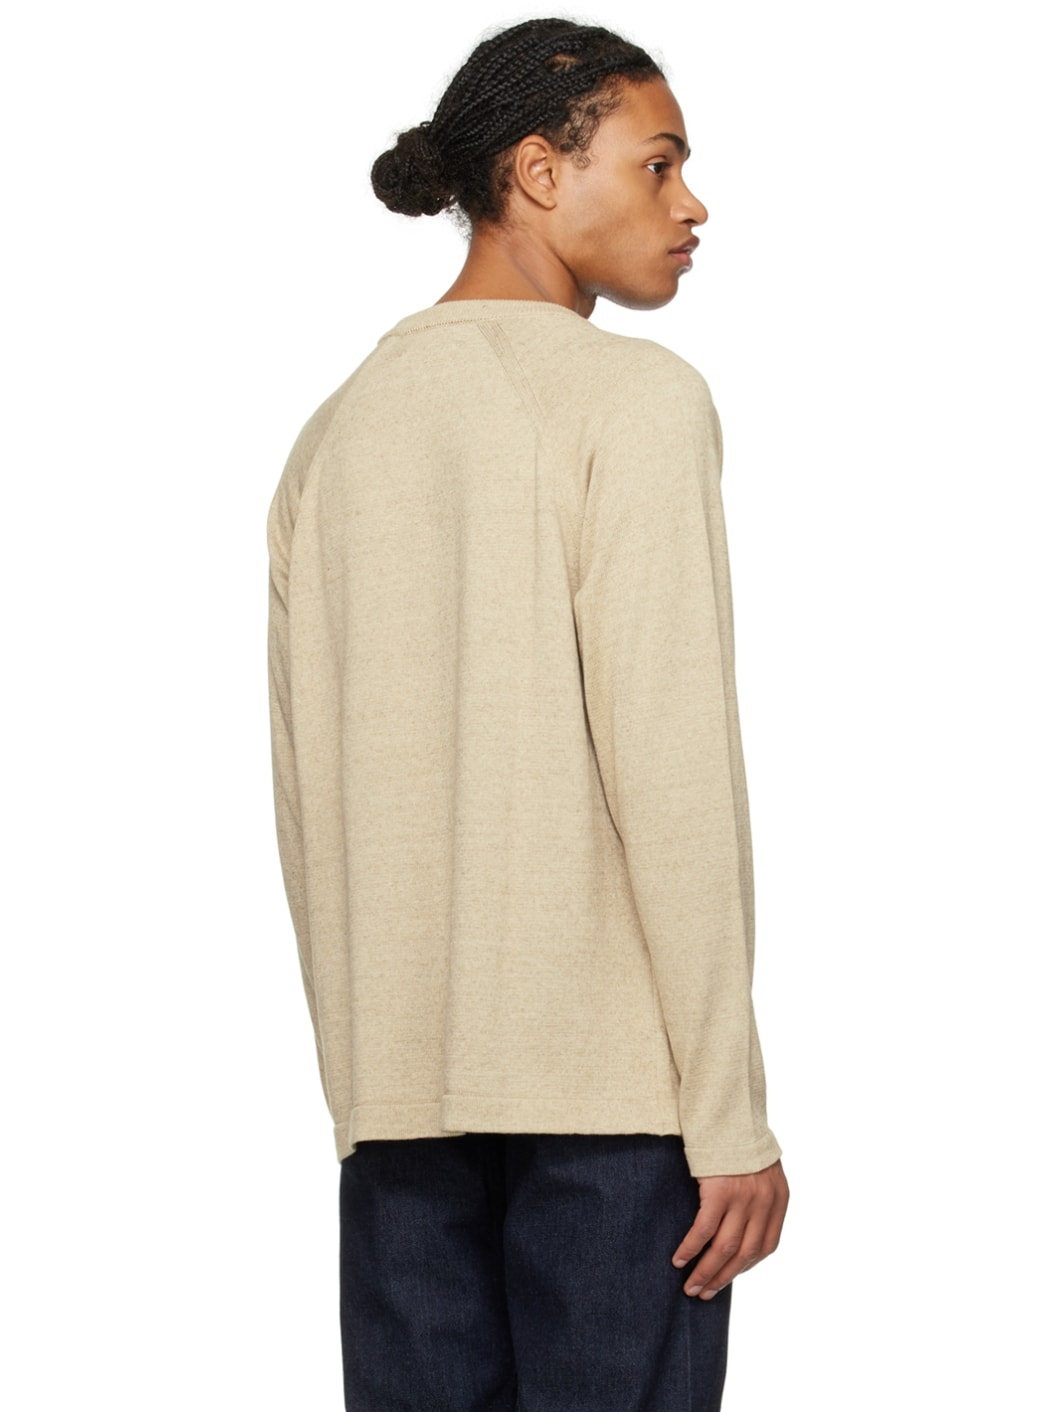 Beige Crewneck Sweater - 3